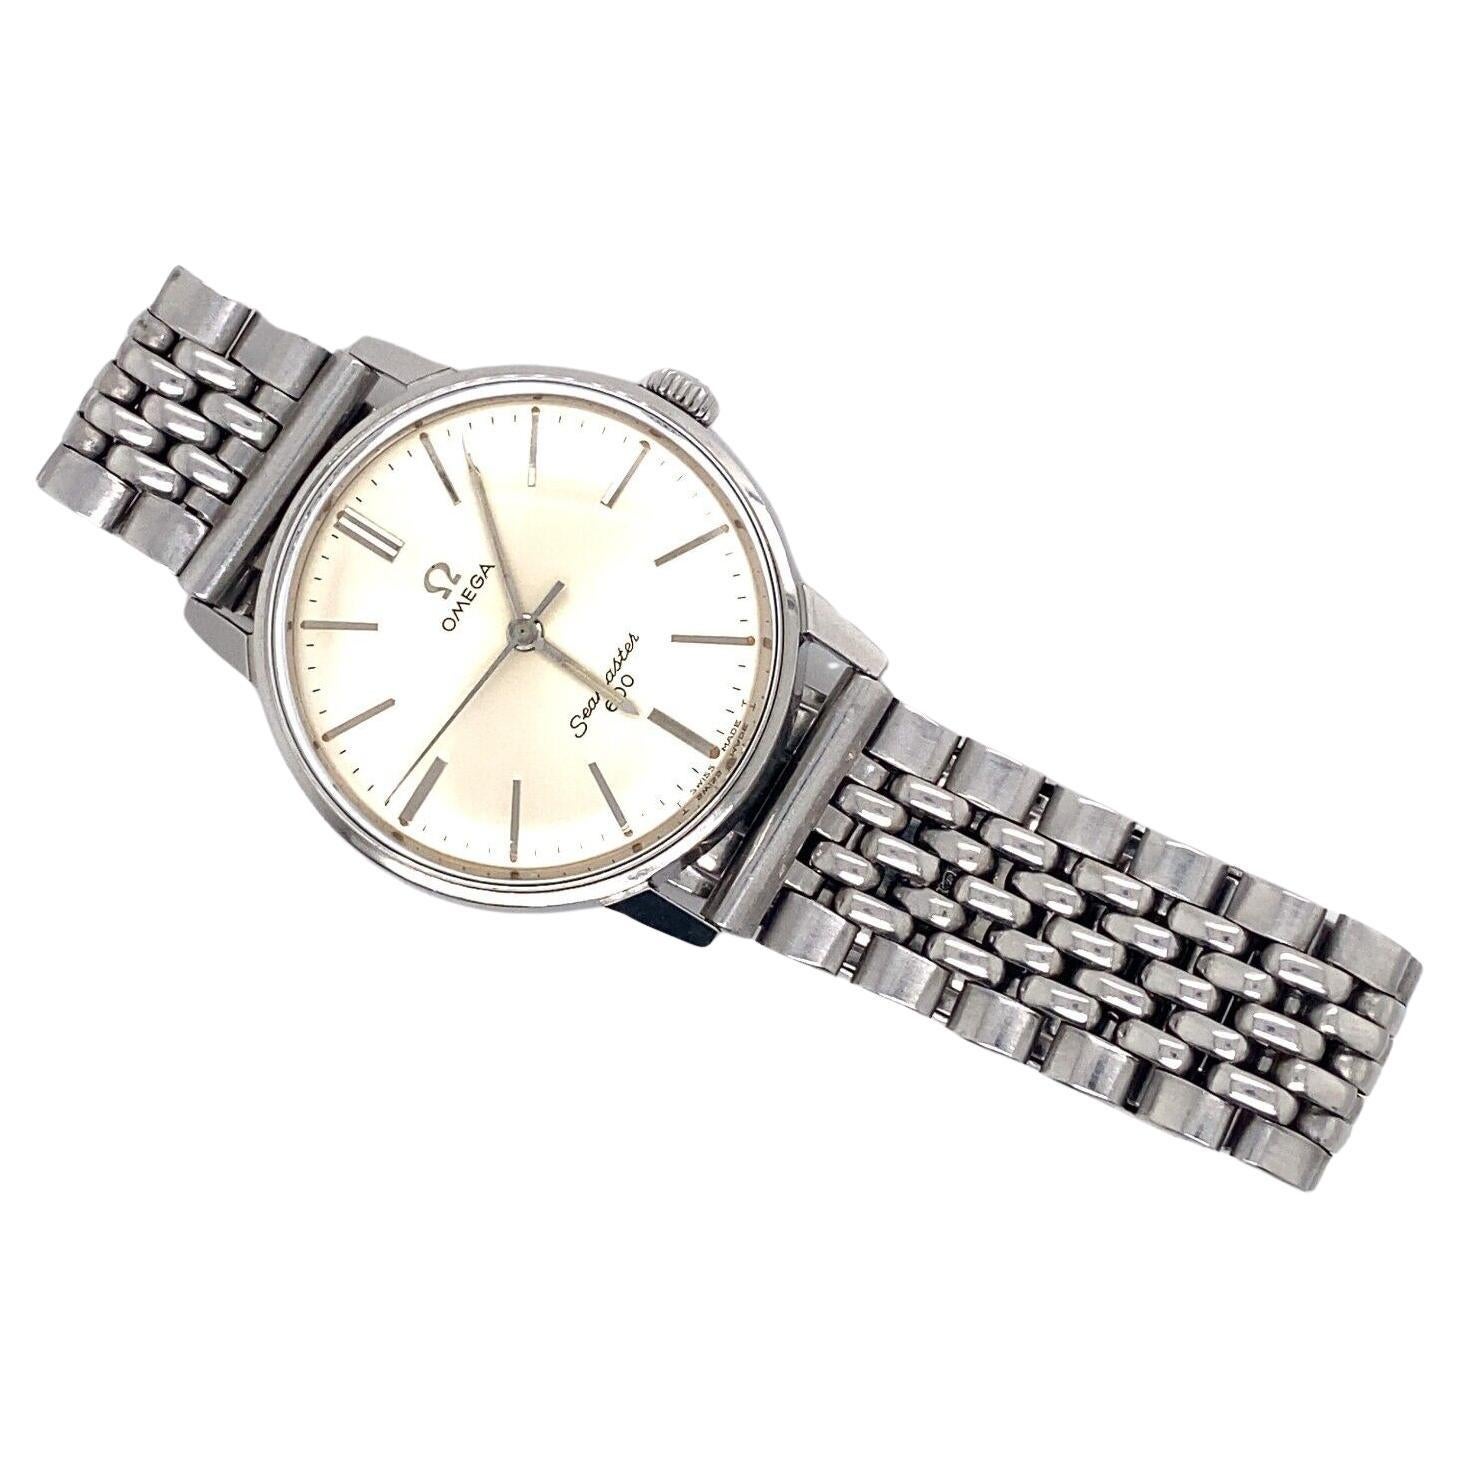 Omega Seamaster 600 Vintage Mechanical Wrist Watch For Sale